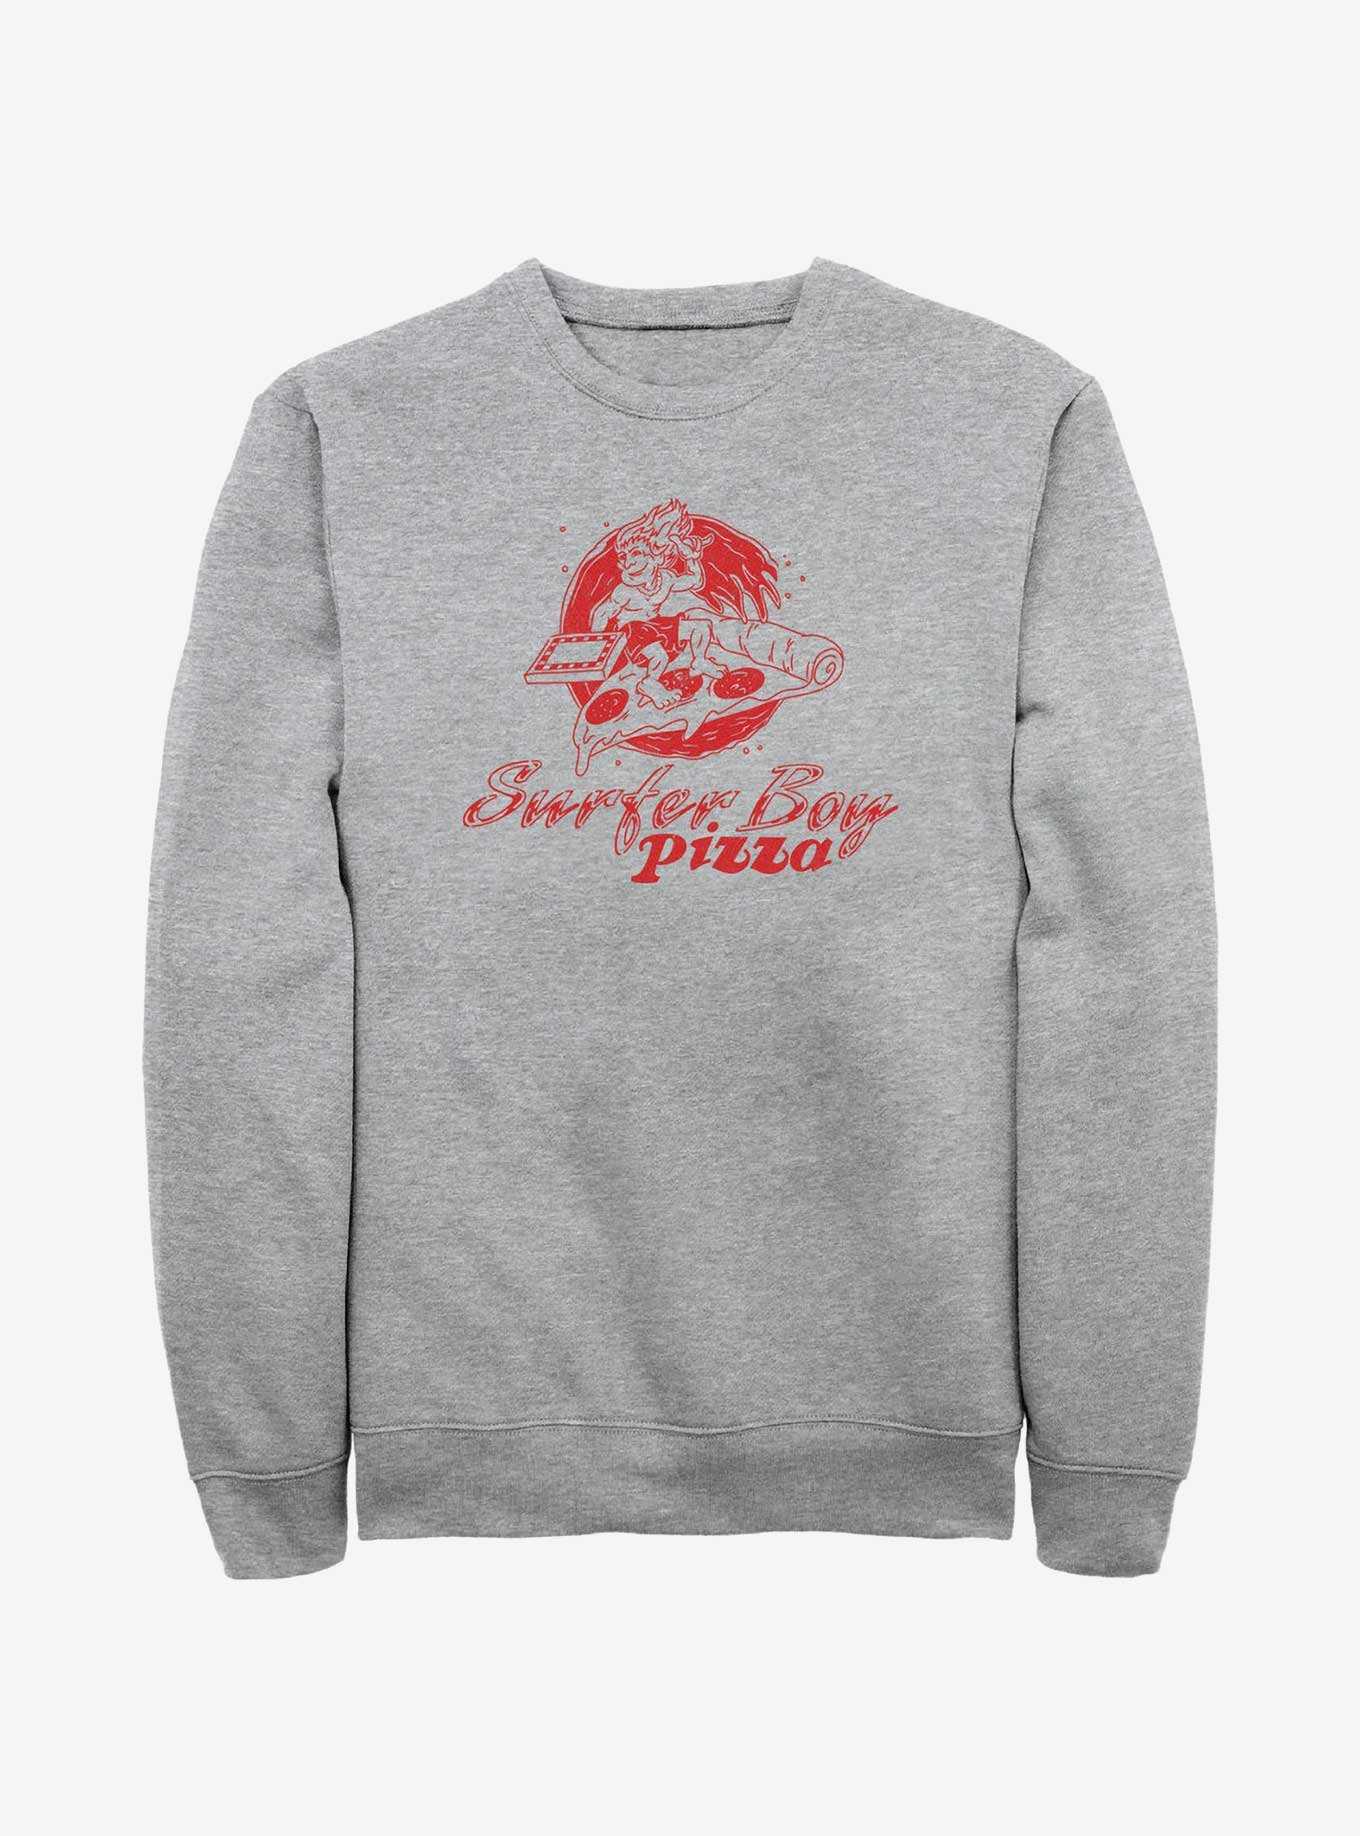 Stranger Things Surfer Boy Pizza Logo Sweatshirt, , hi-res